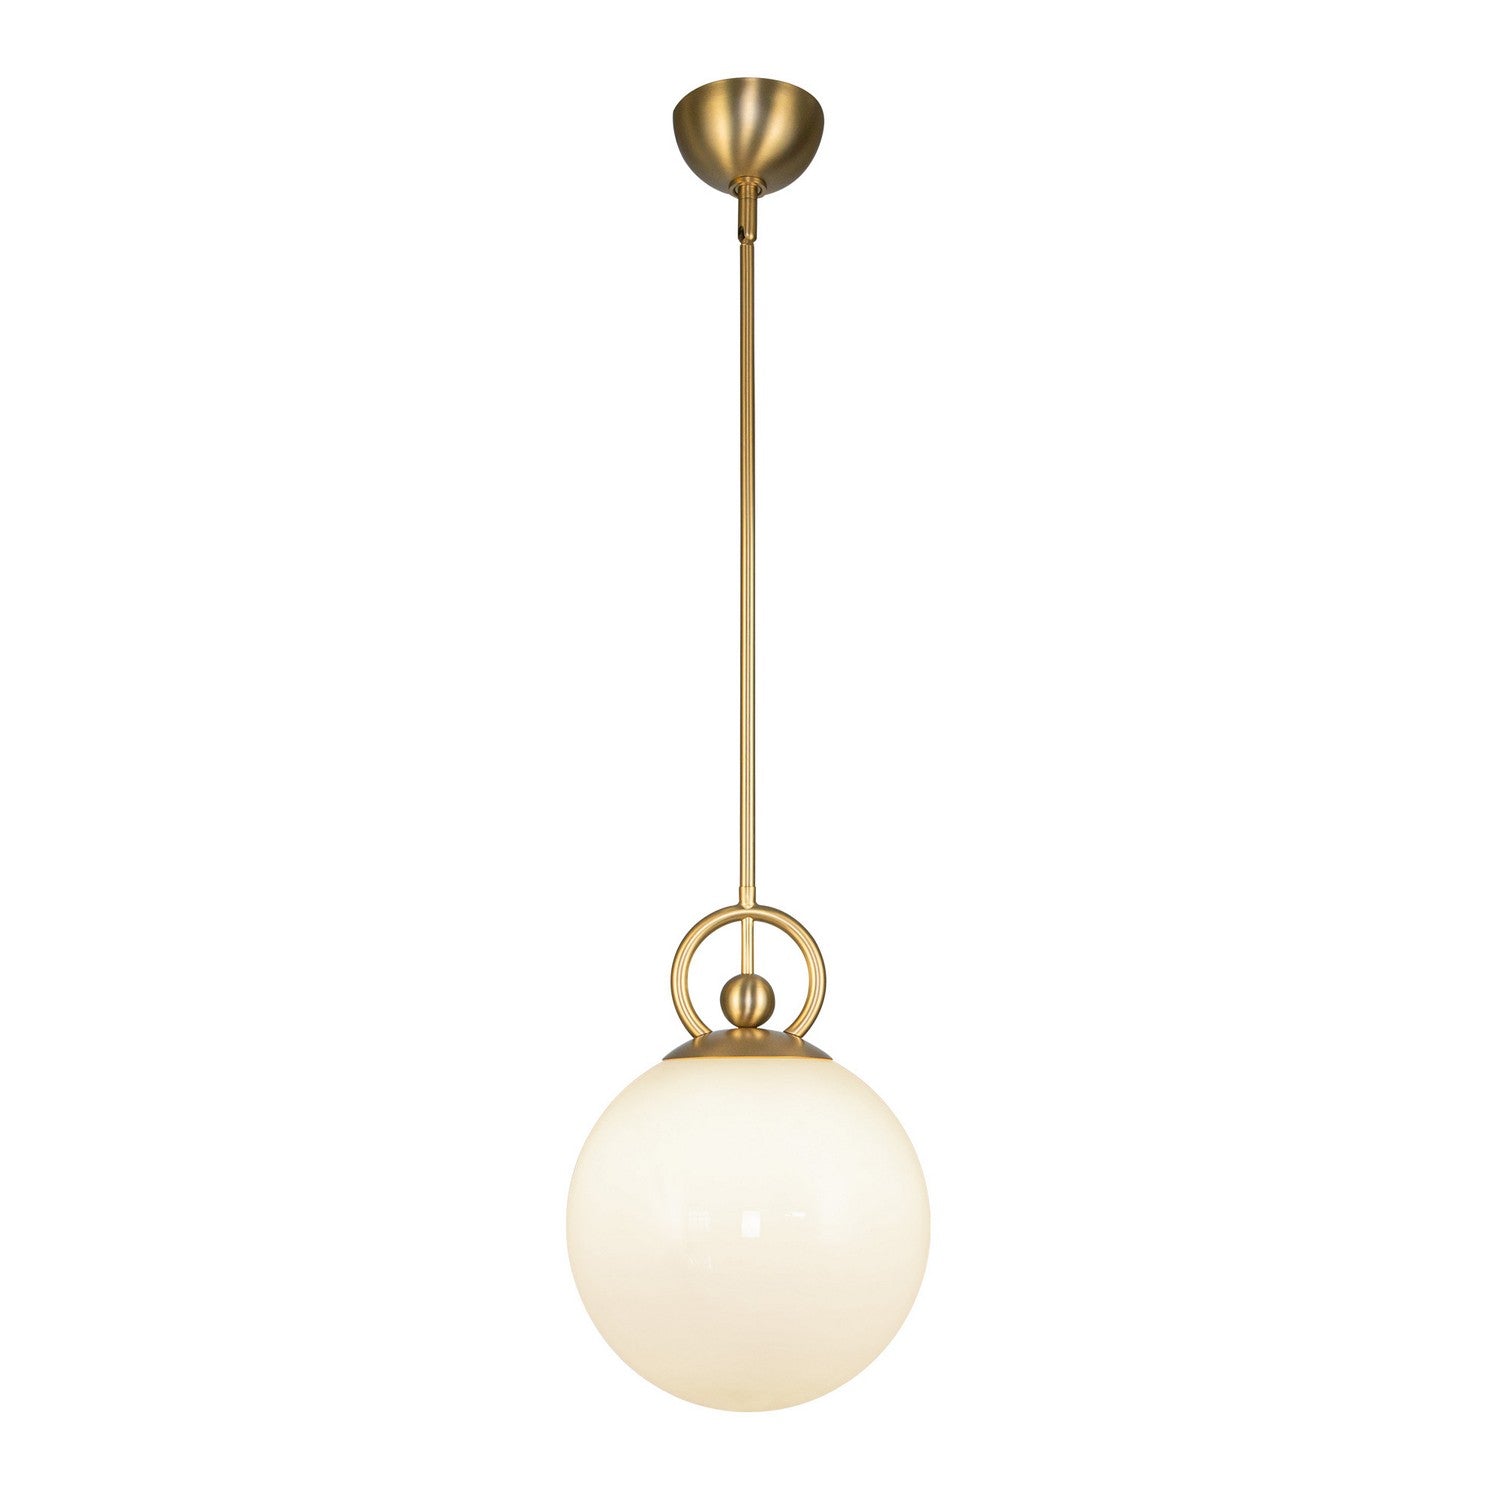 Alora Canada - One Light Pendant - Fiore - Brushed Gold/Glossy Opal Glass- Union Lighting Luminaires Decor